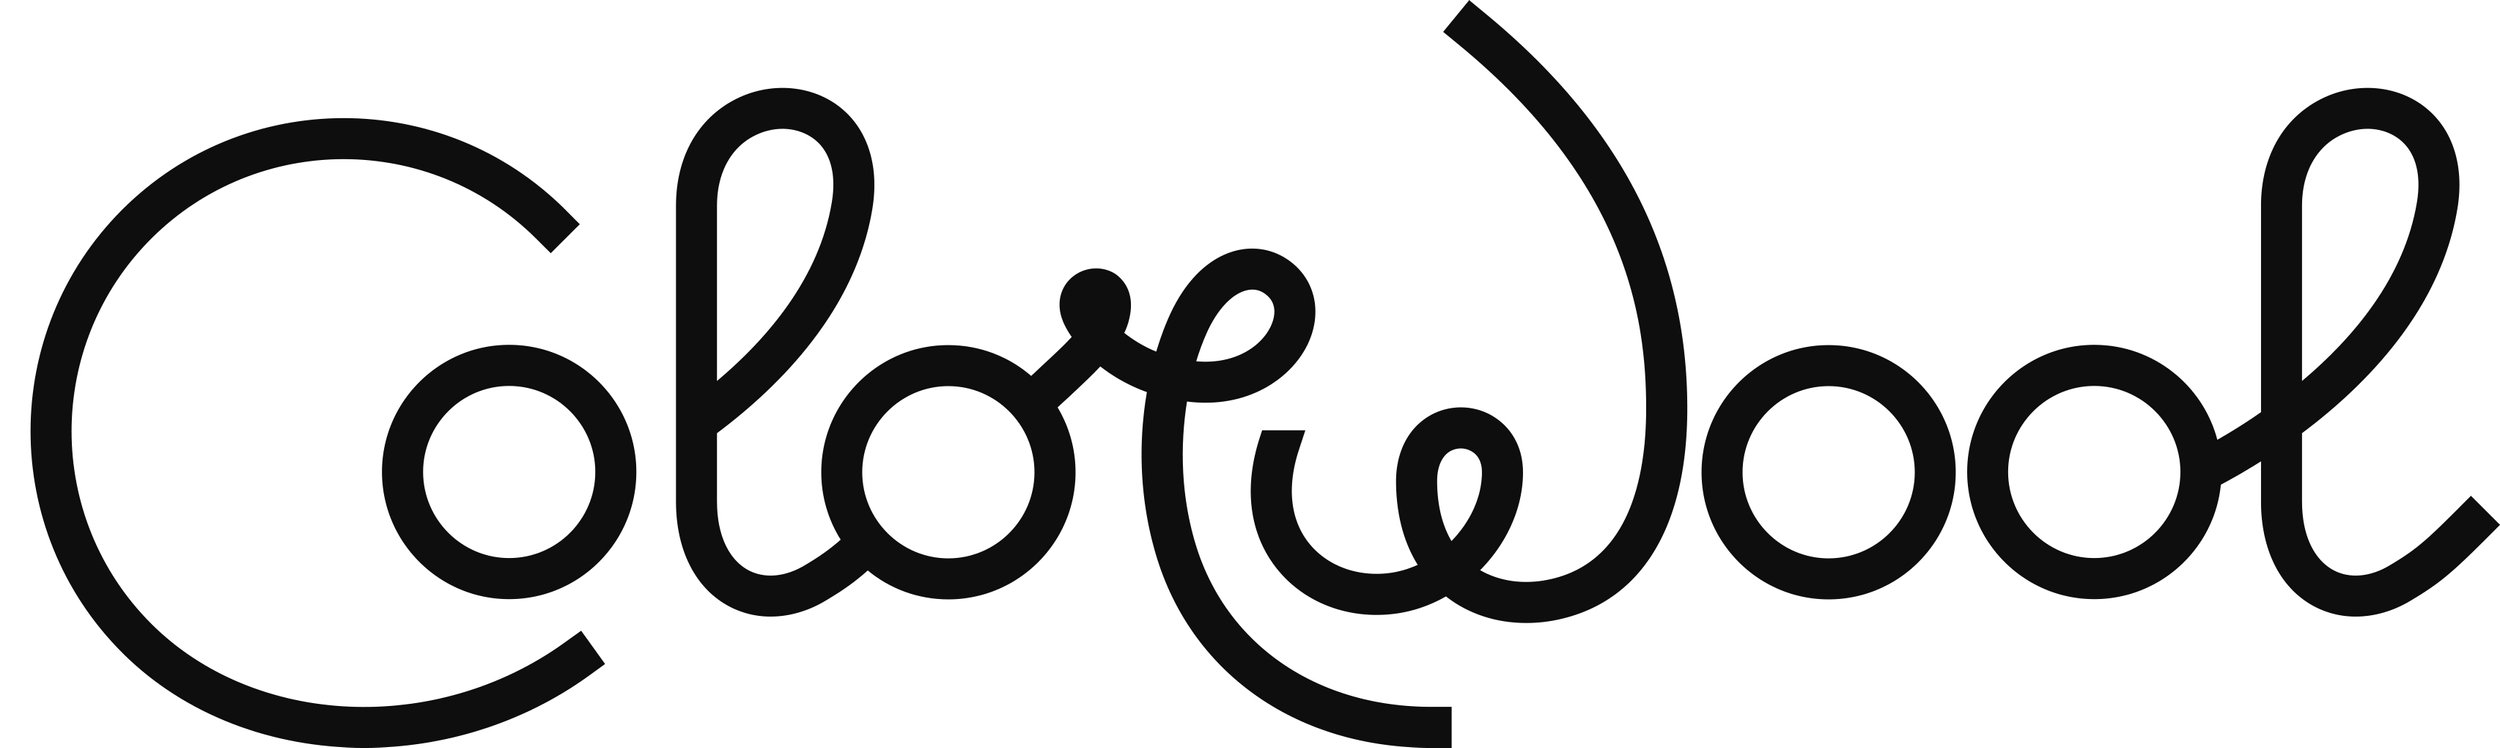 colorwool-logo (1).jpg